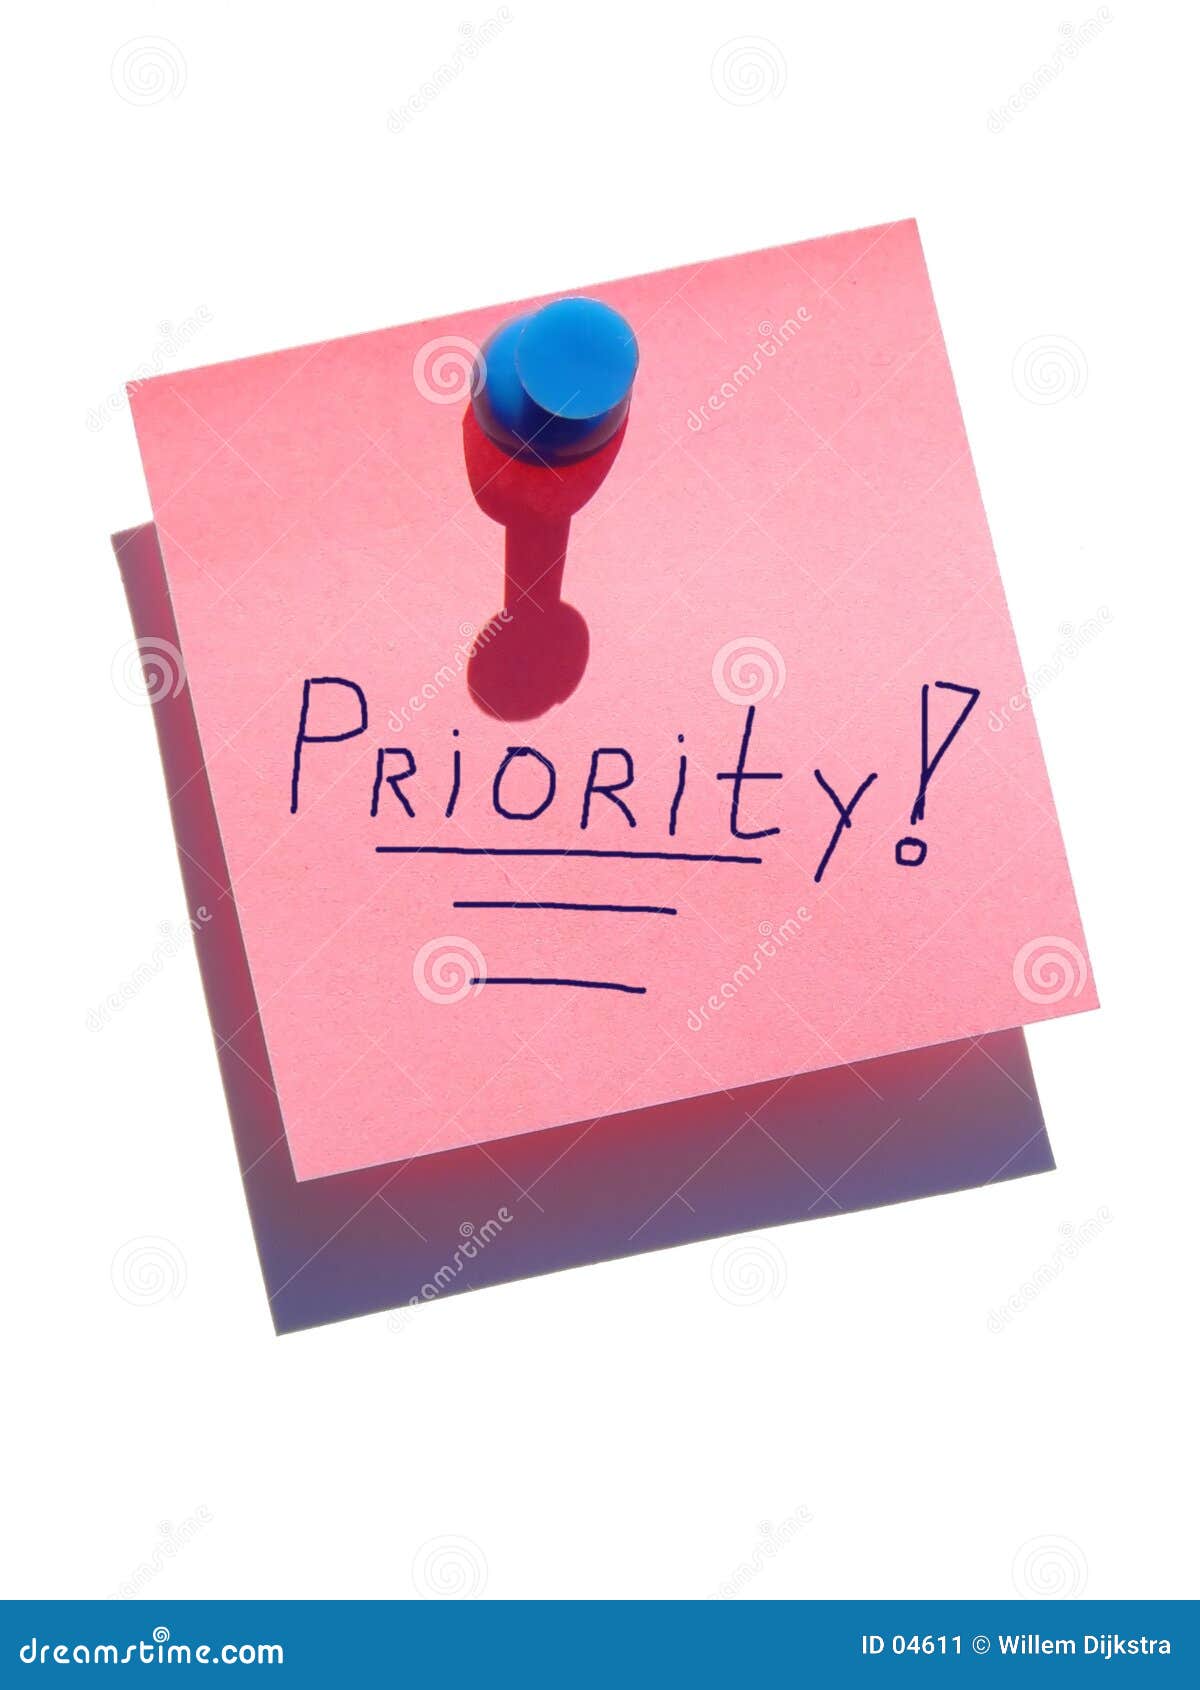 priority note